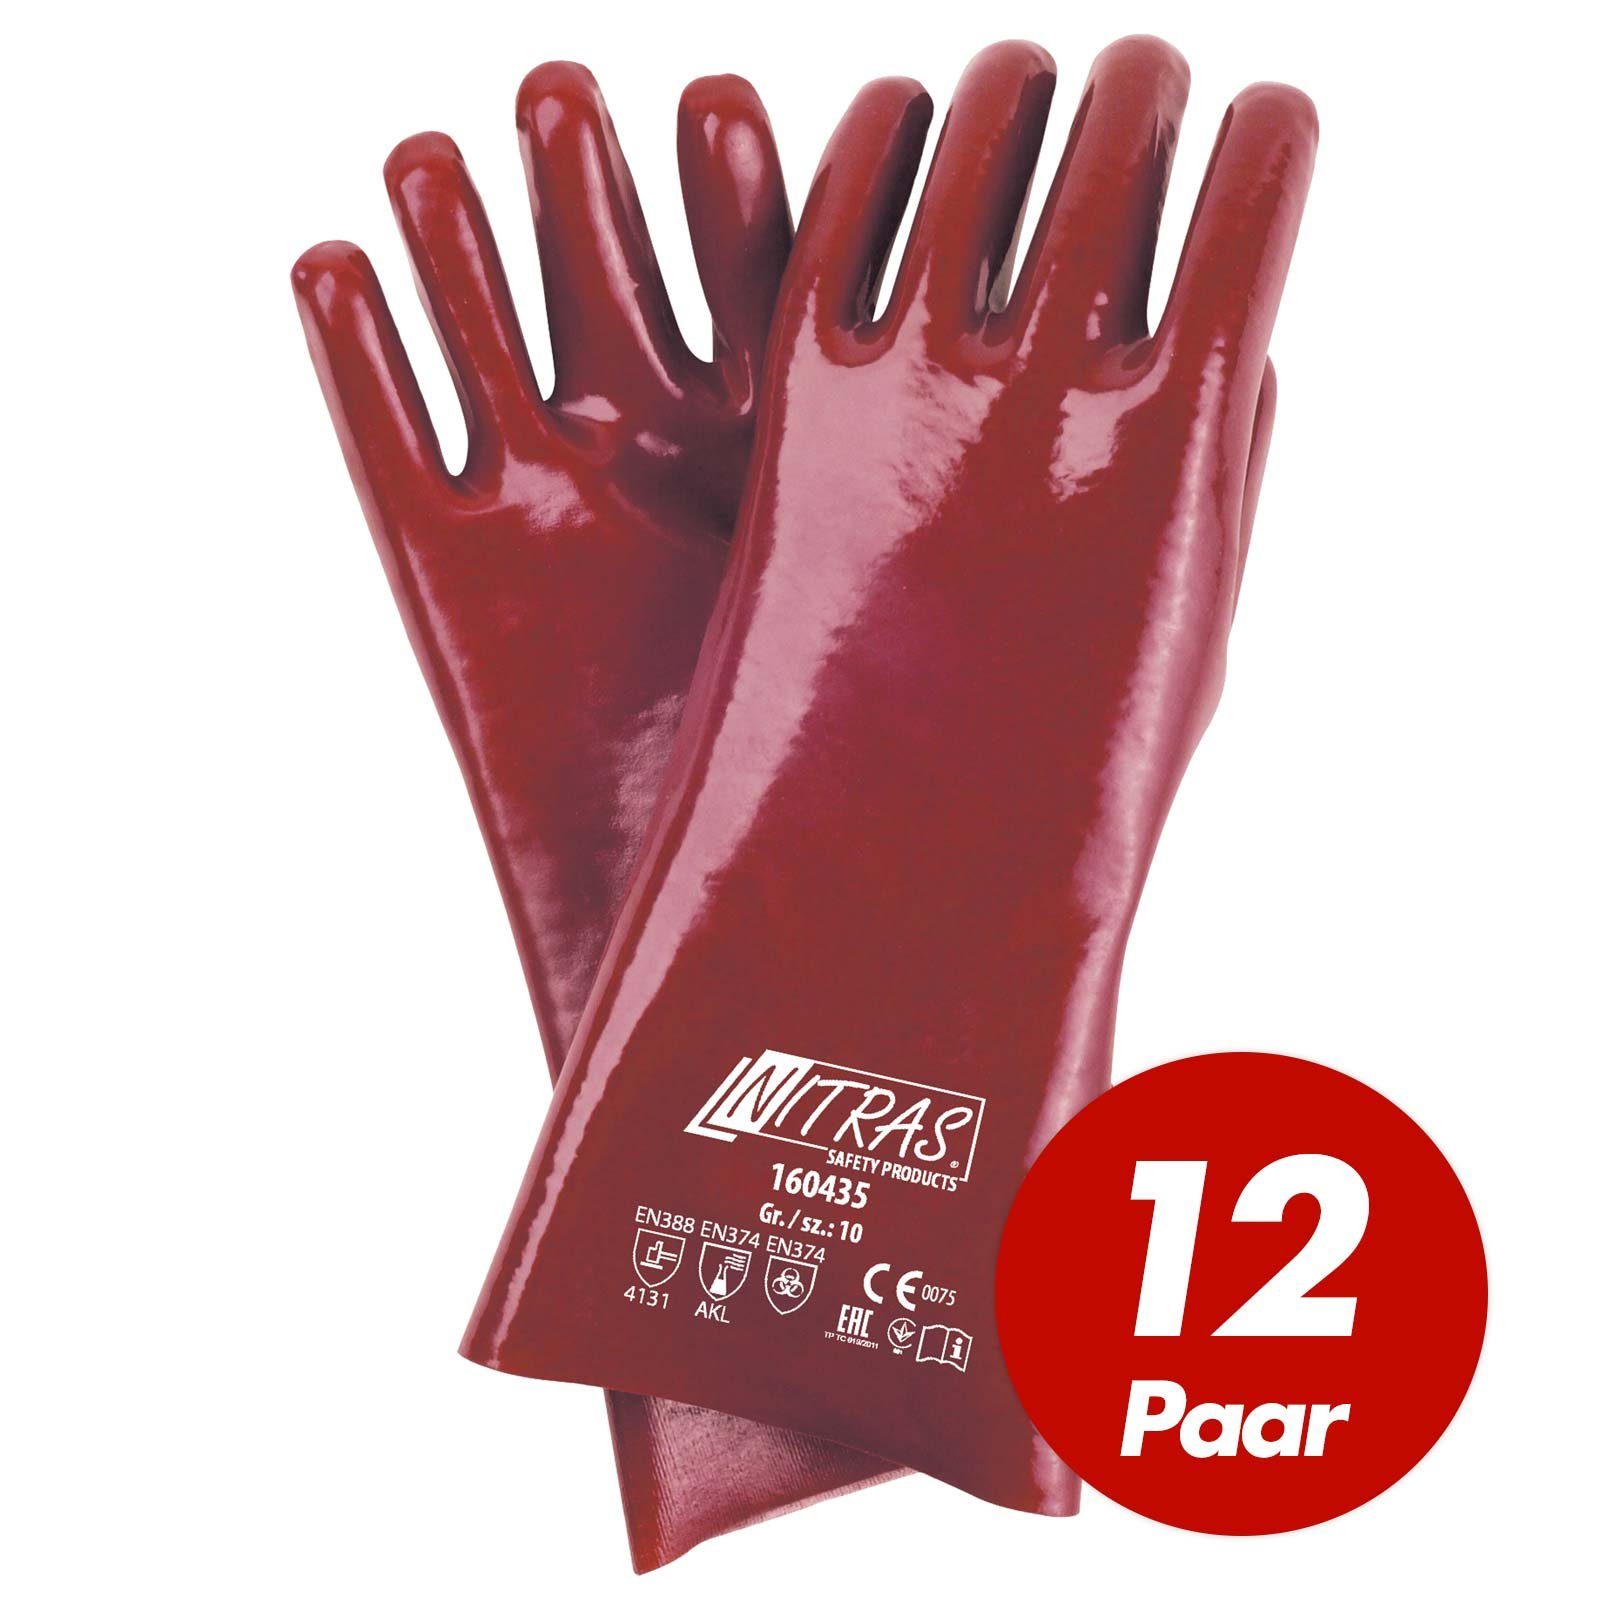 Nitras Putzhandschuh NITRAS PVC-Handschuhe 160435 vollbeschichtete Handschuhe - 12 Paar (Set)